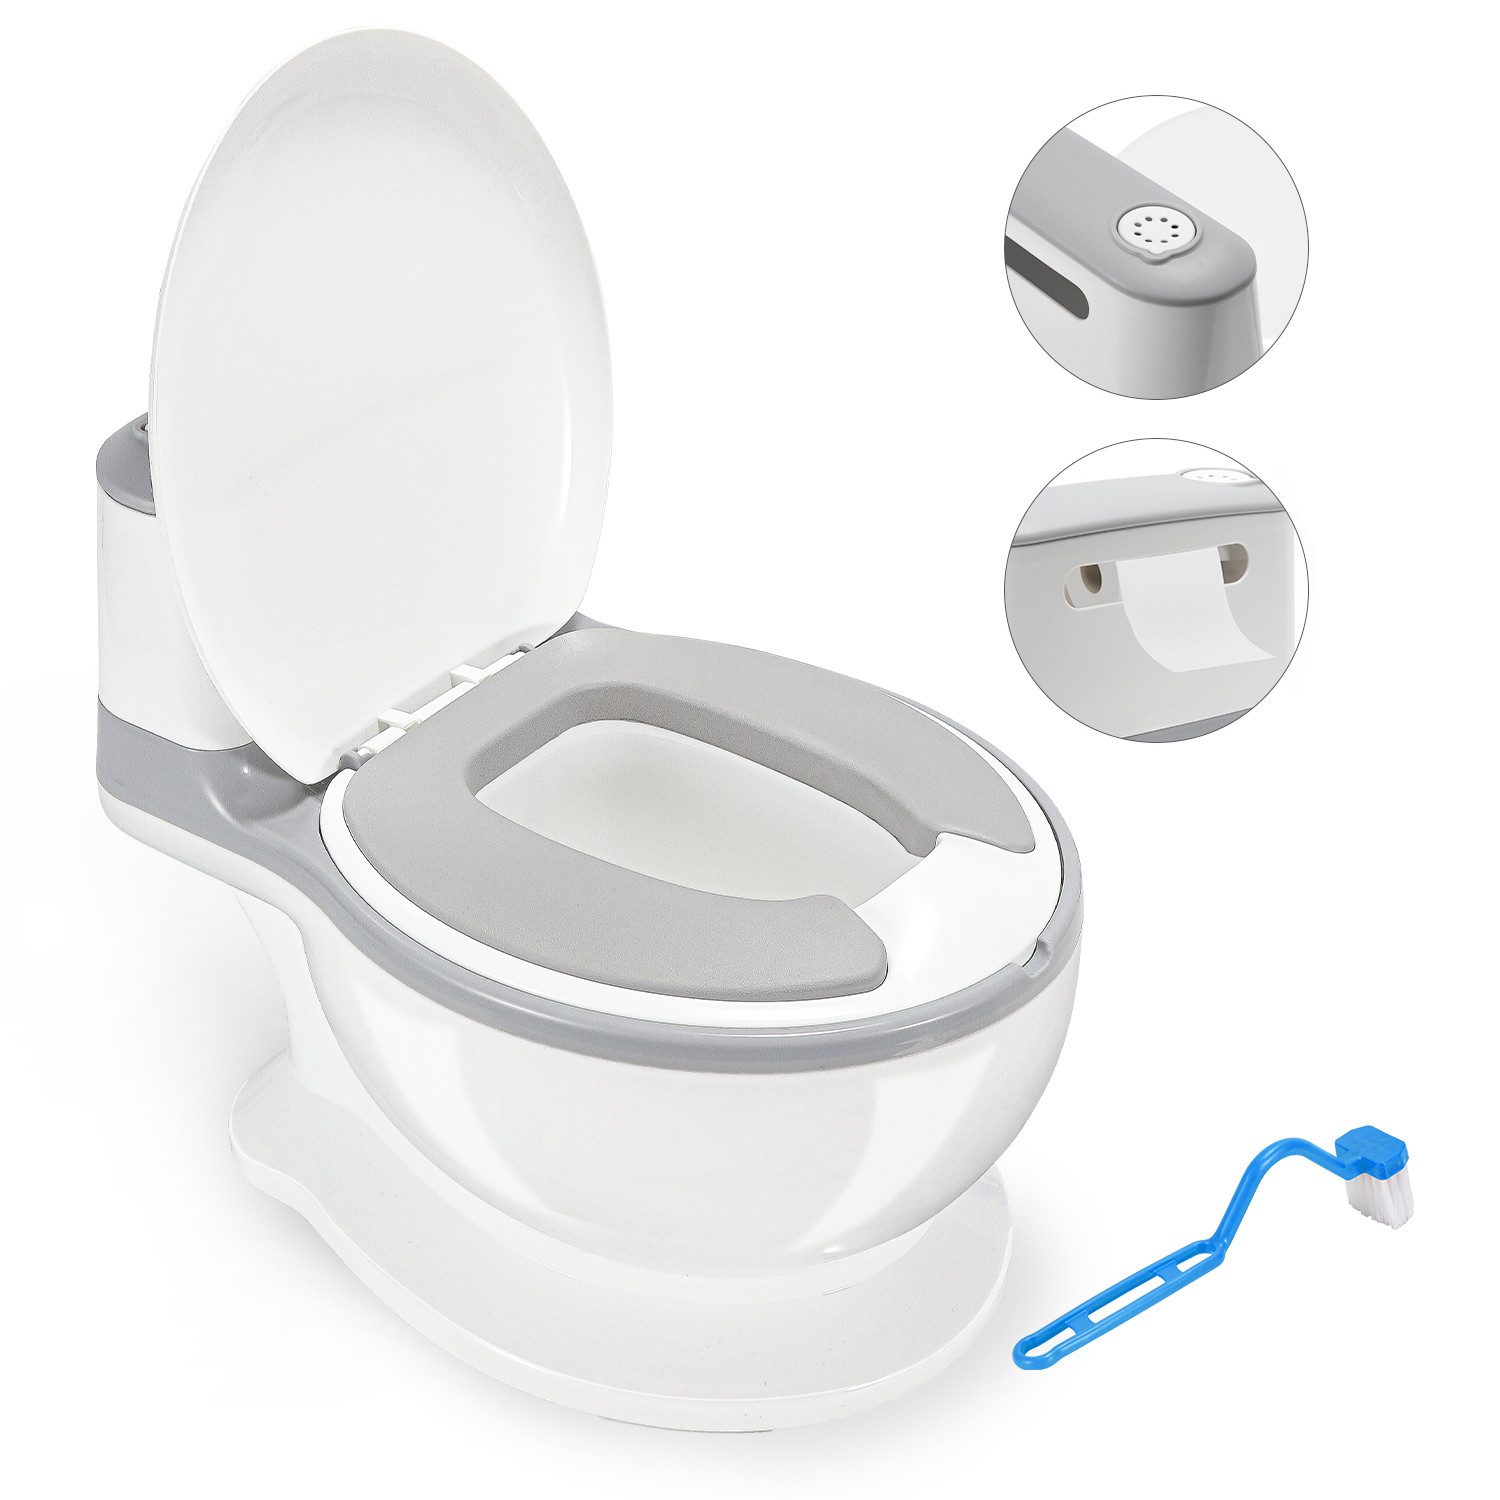 Randaco Toilettentrainer Baby-Toilettensitz Kinder Töpfchen Kindertoilette Potty mit Spülsound, Kindertoilette